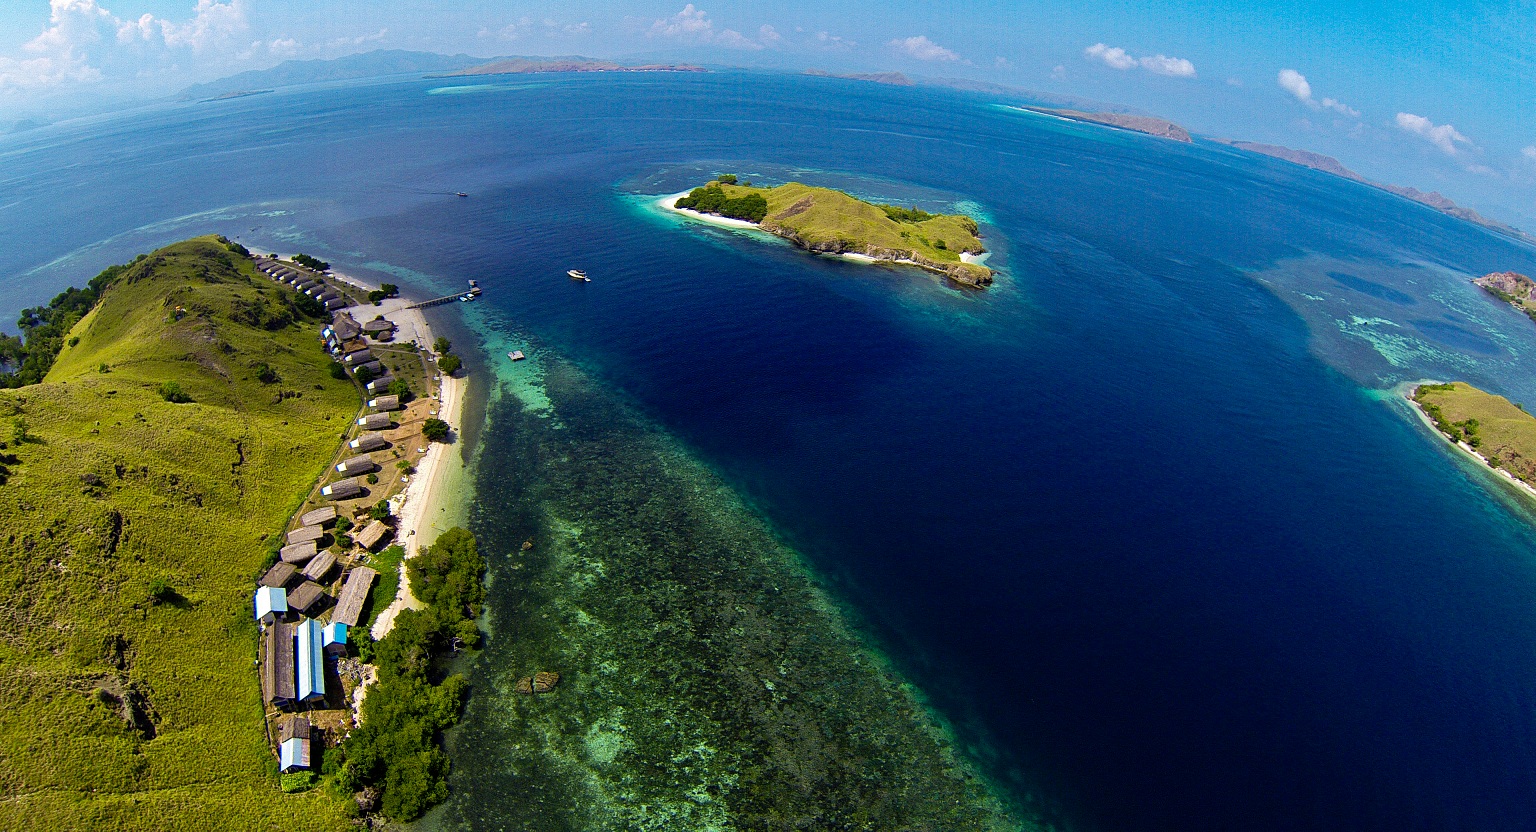 Aerial shot of Sebayur Besar Island